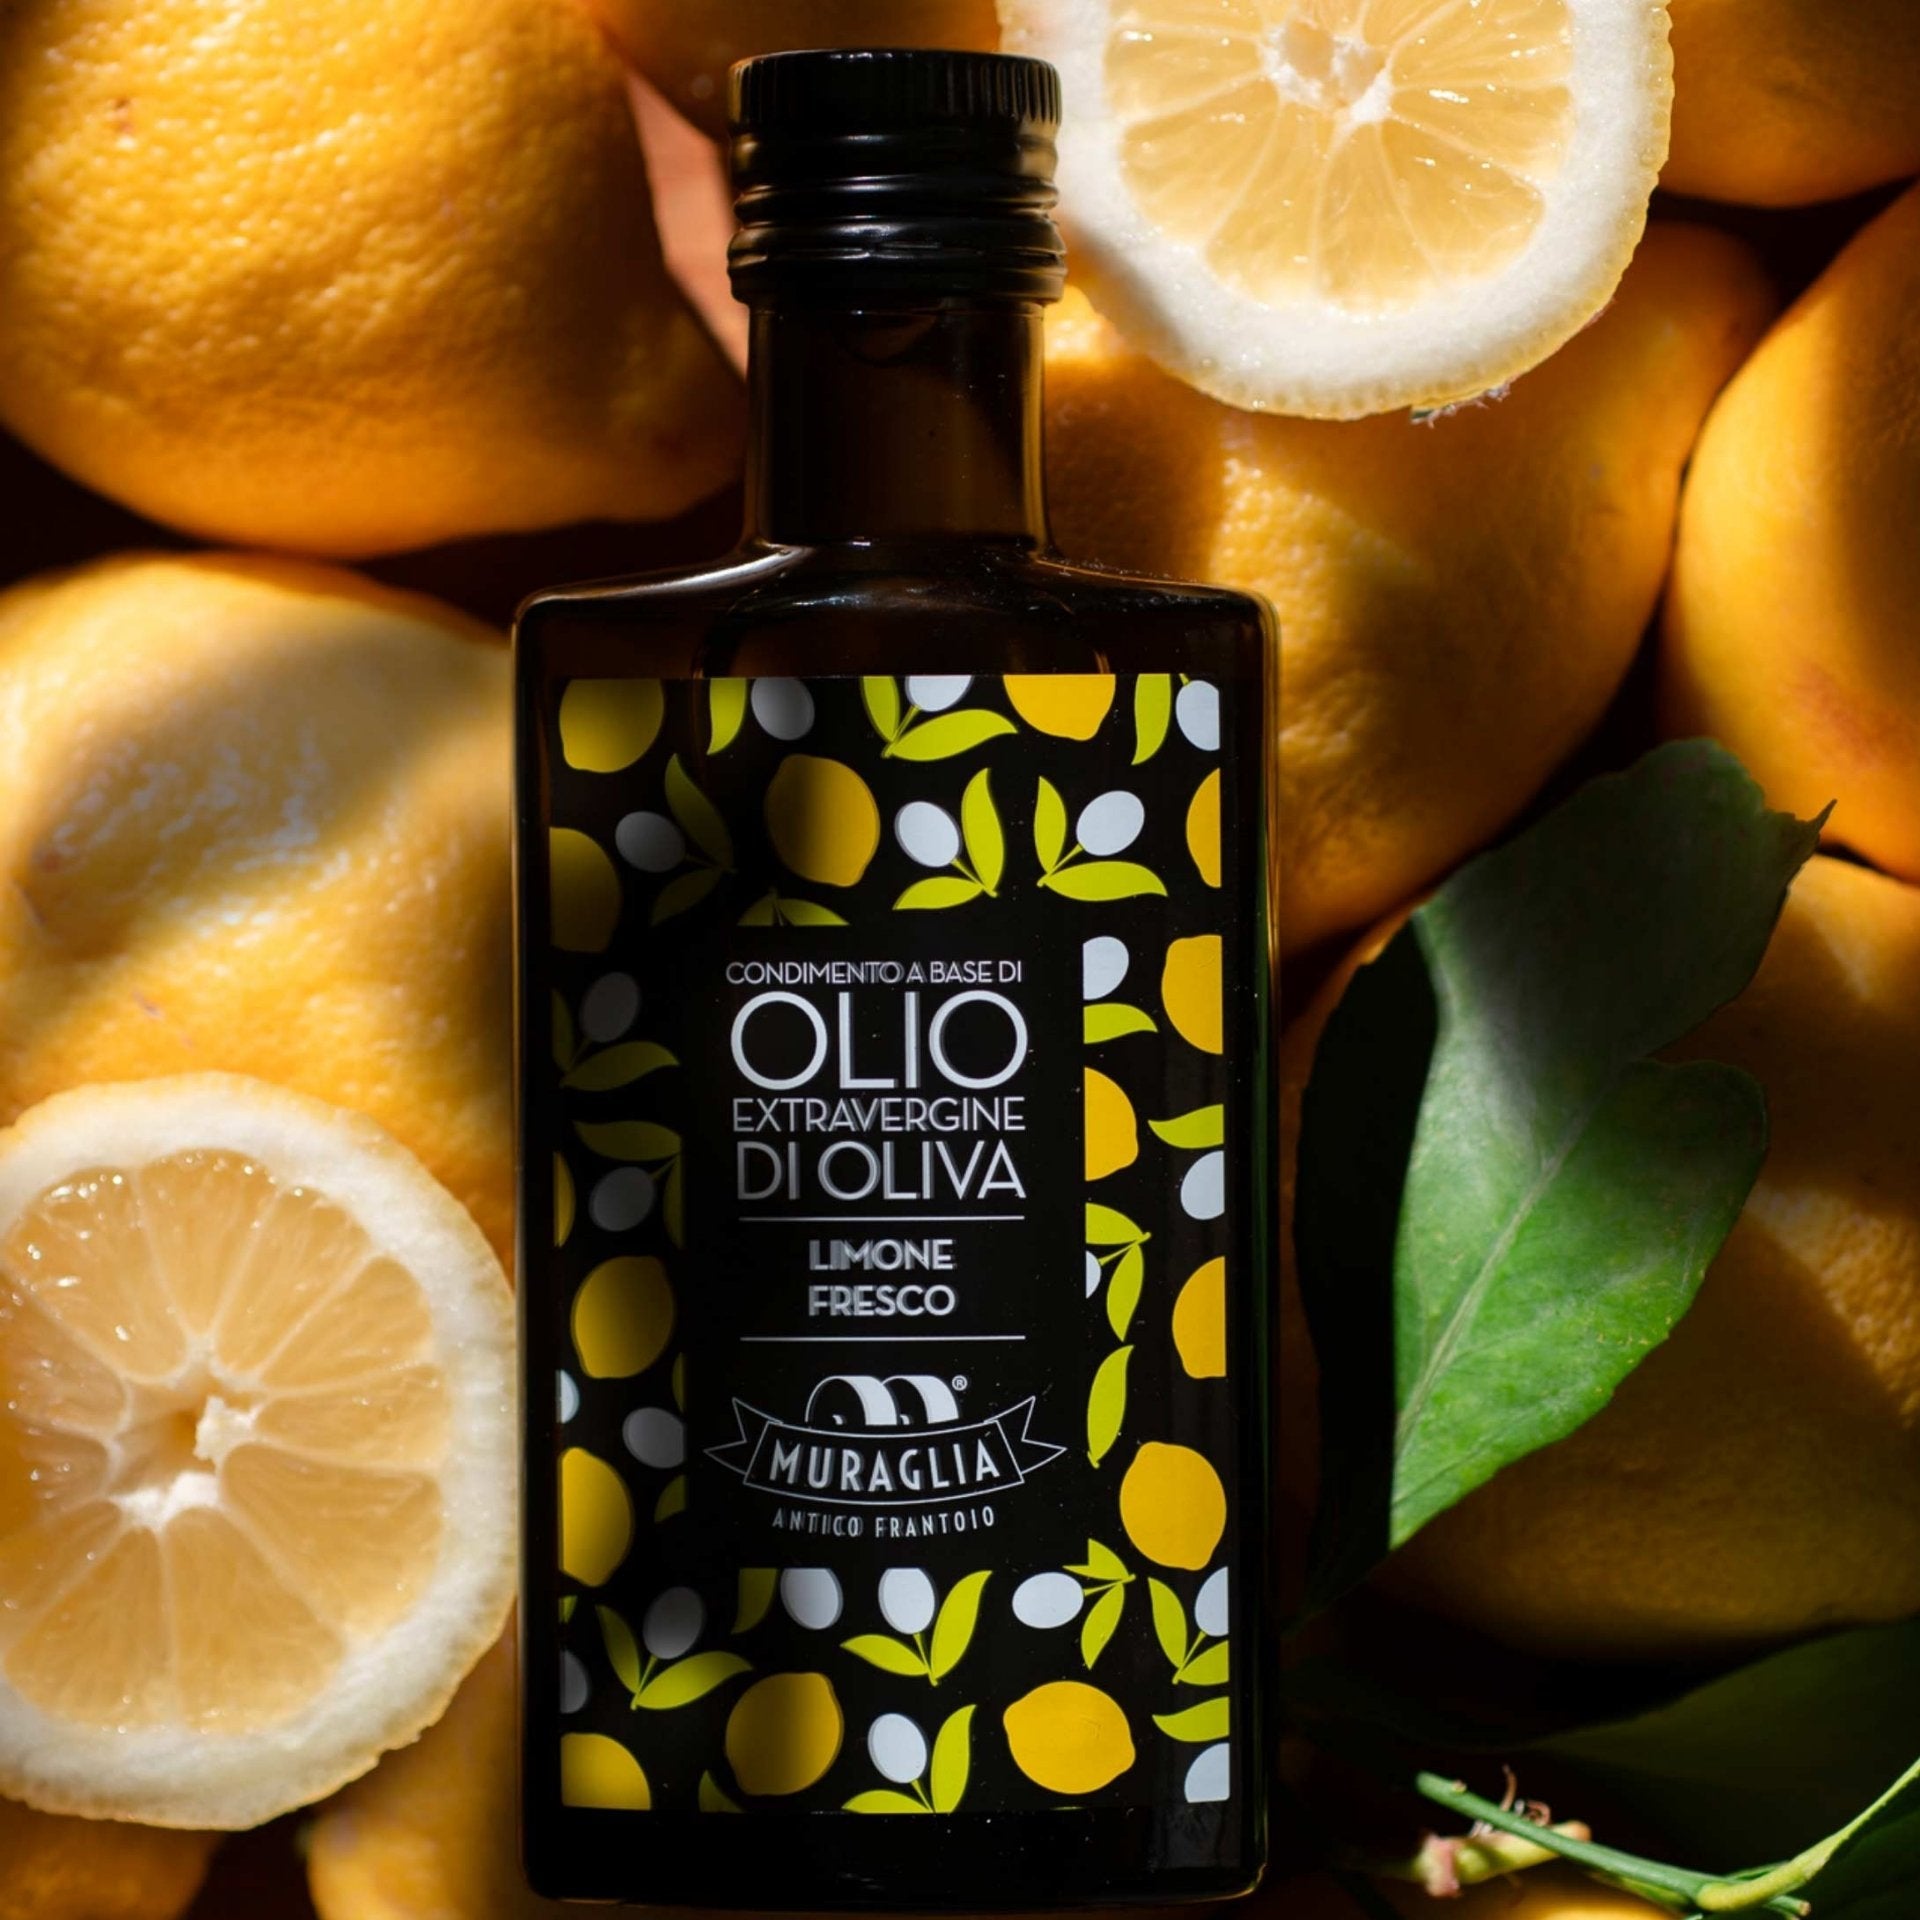 Frantoio Muraglia Fresh Lemon Aromatic Extra Virgin Olive Oil 200ml Feast Italy